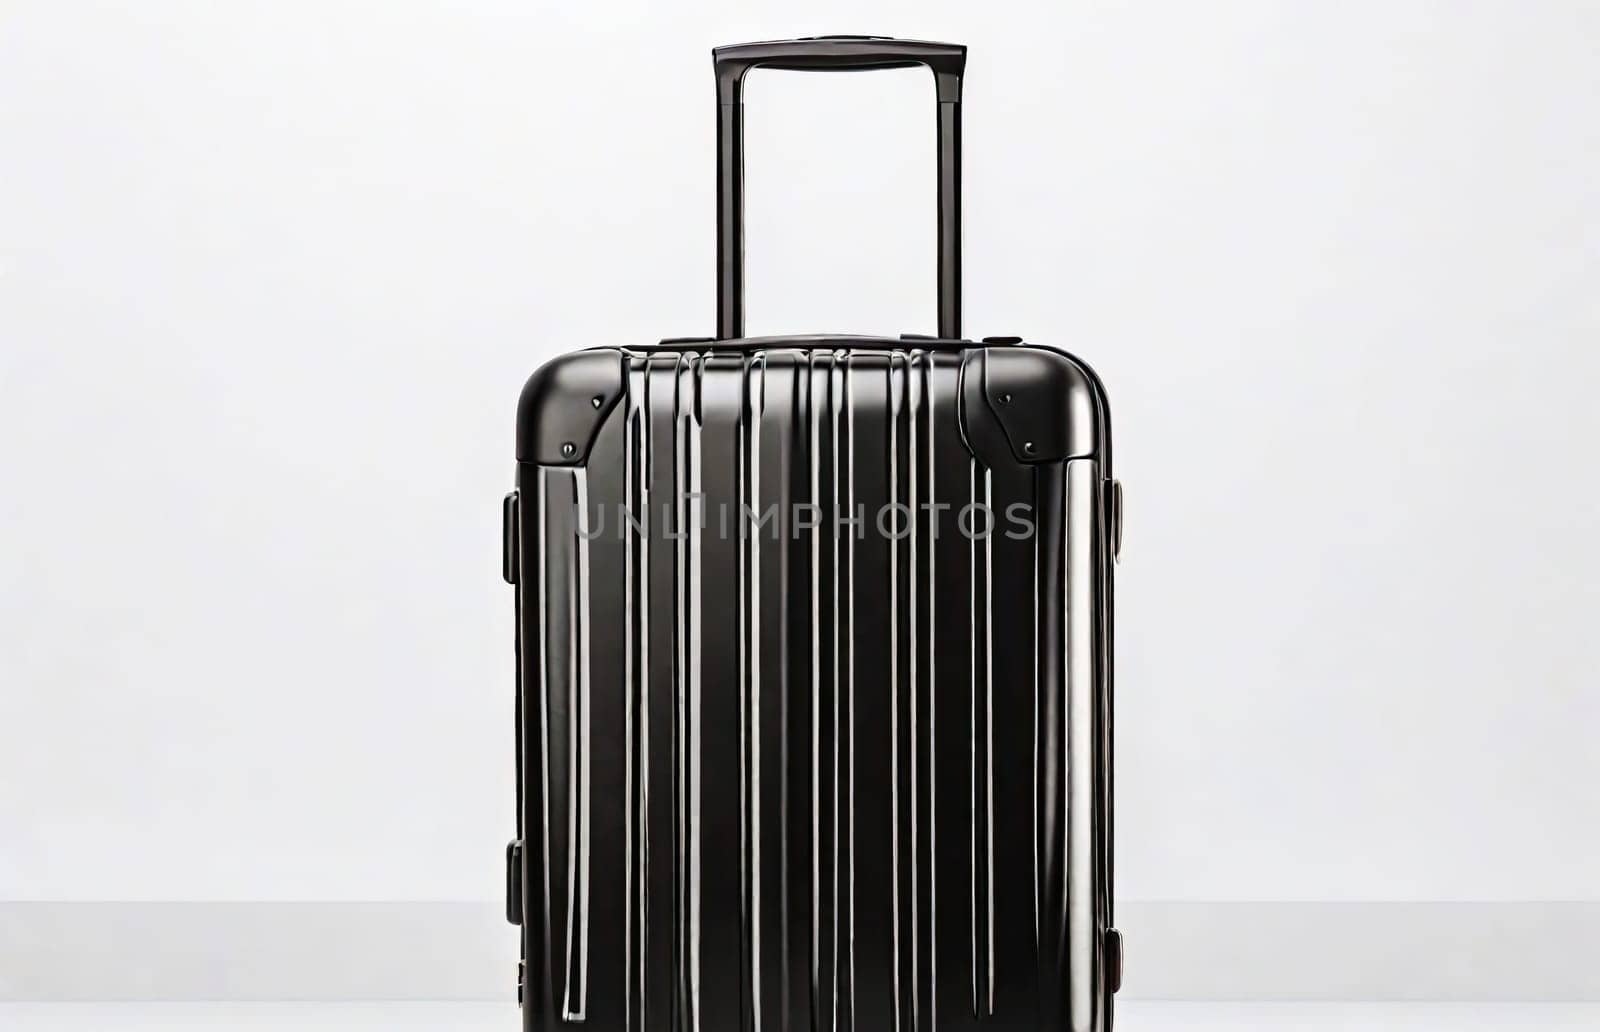 Black travel suitcase or luggage for traveler on white background.